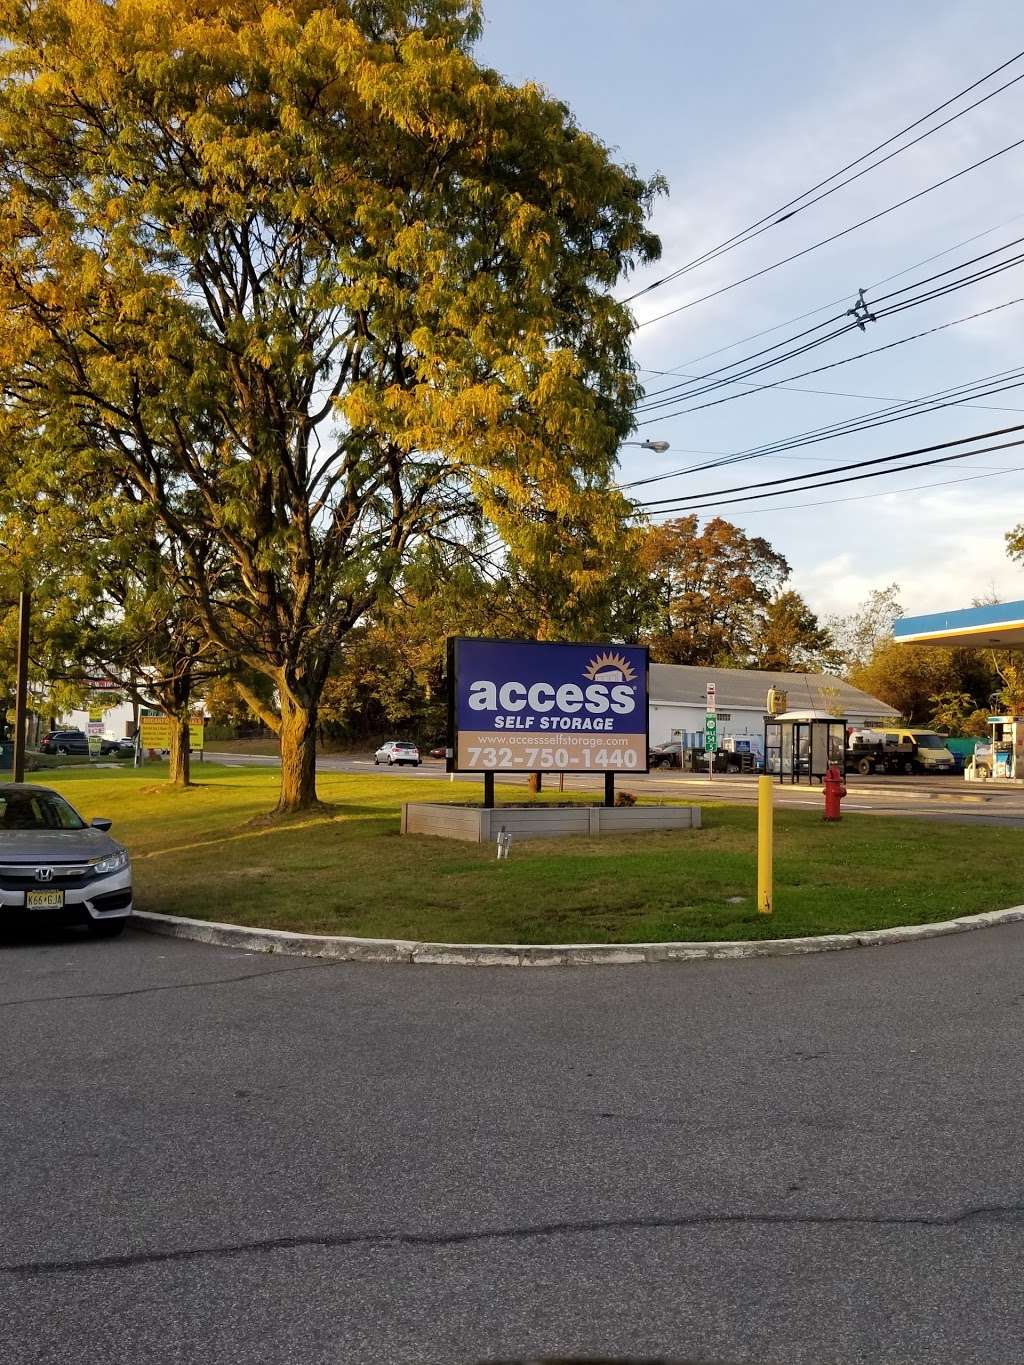 Access Self Storage | 135 Amboy Ave, Woodbridge, NJ 07095 | Phone: (732) 750-1440